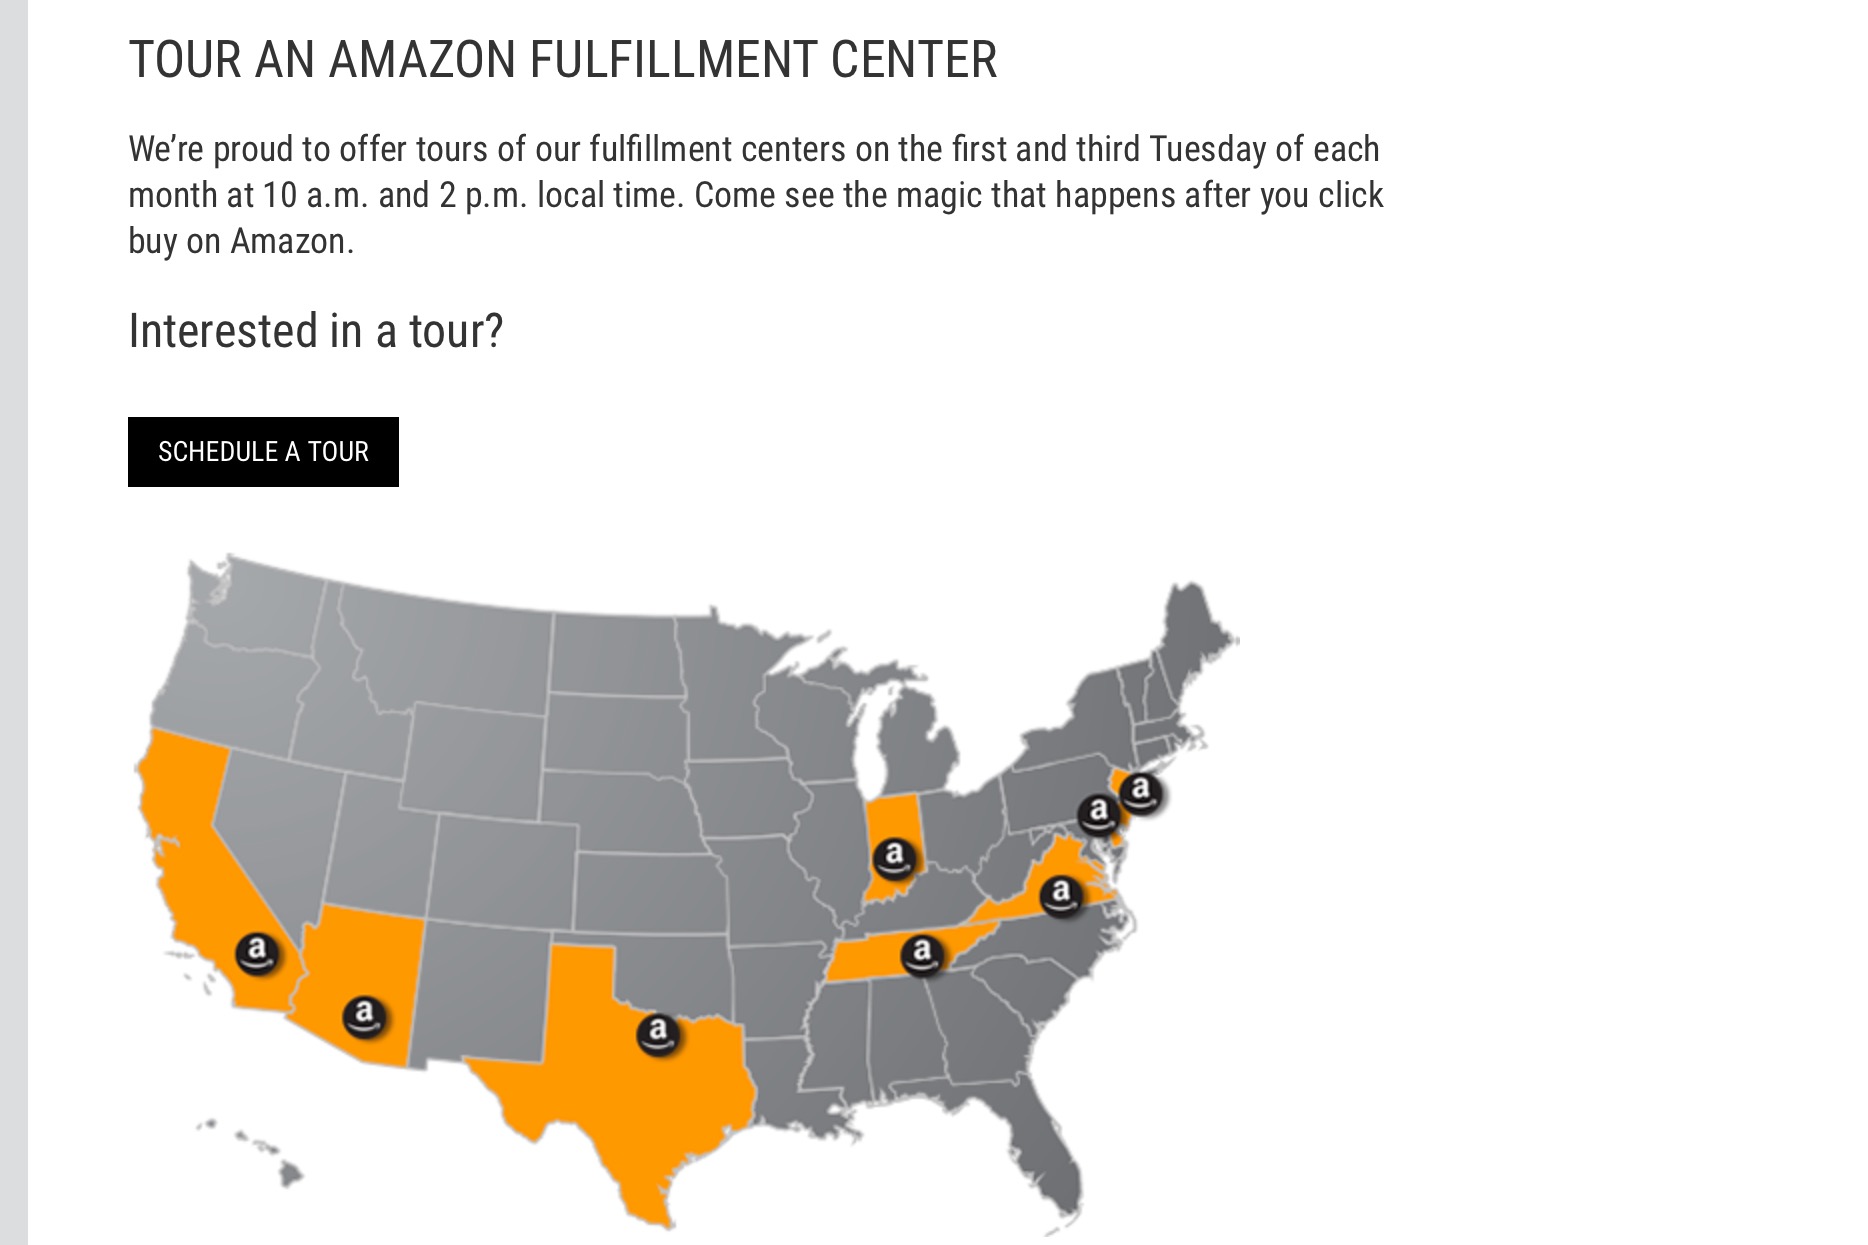 Amazon fulfilment centers